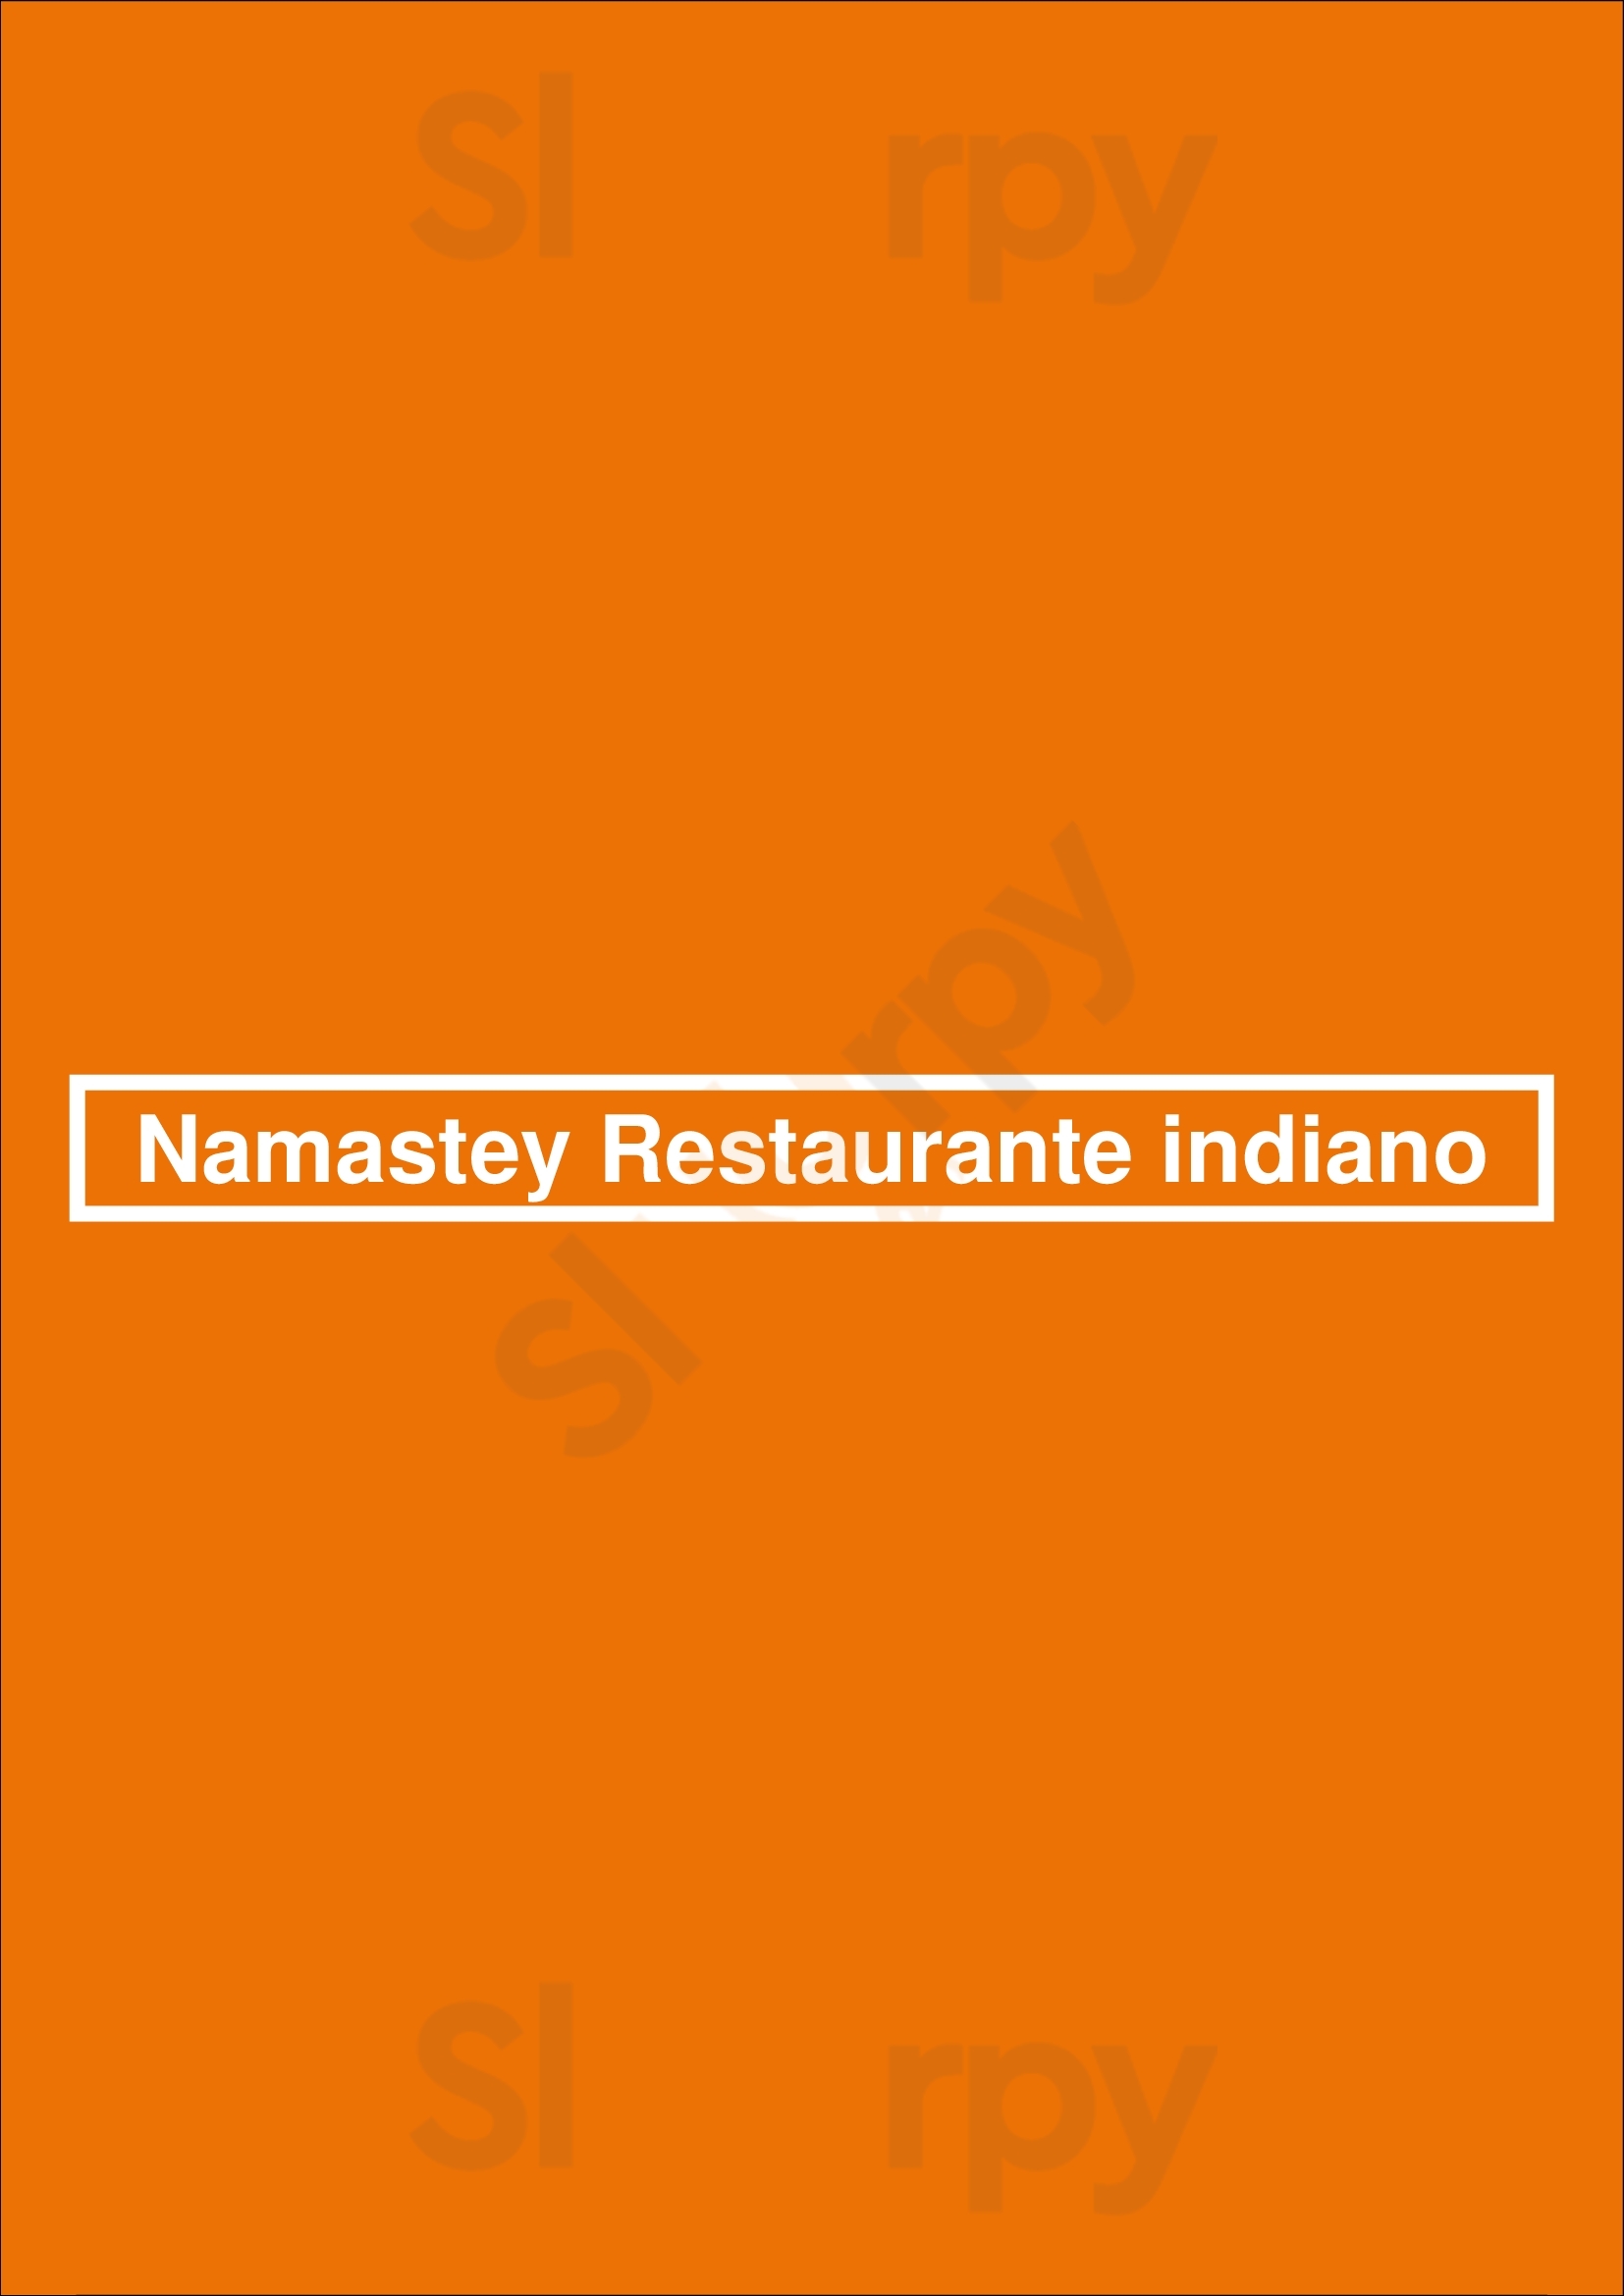 Namastey Restaurante Indiano Faro Menu - 1